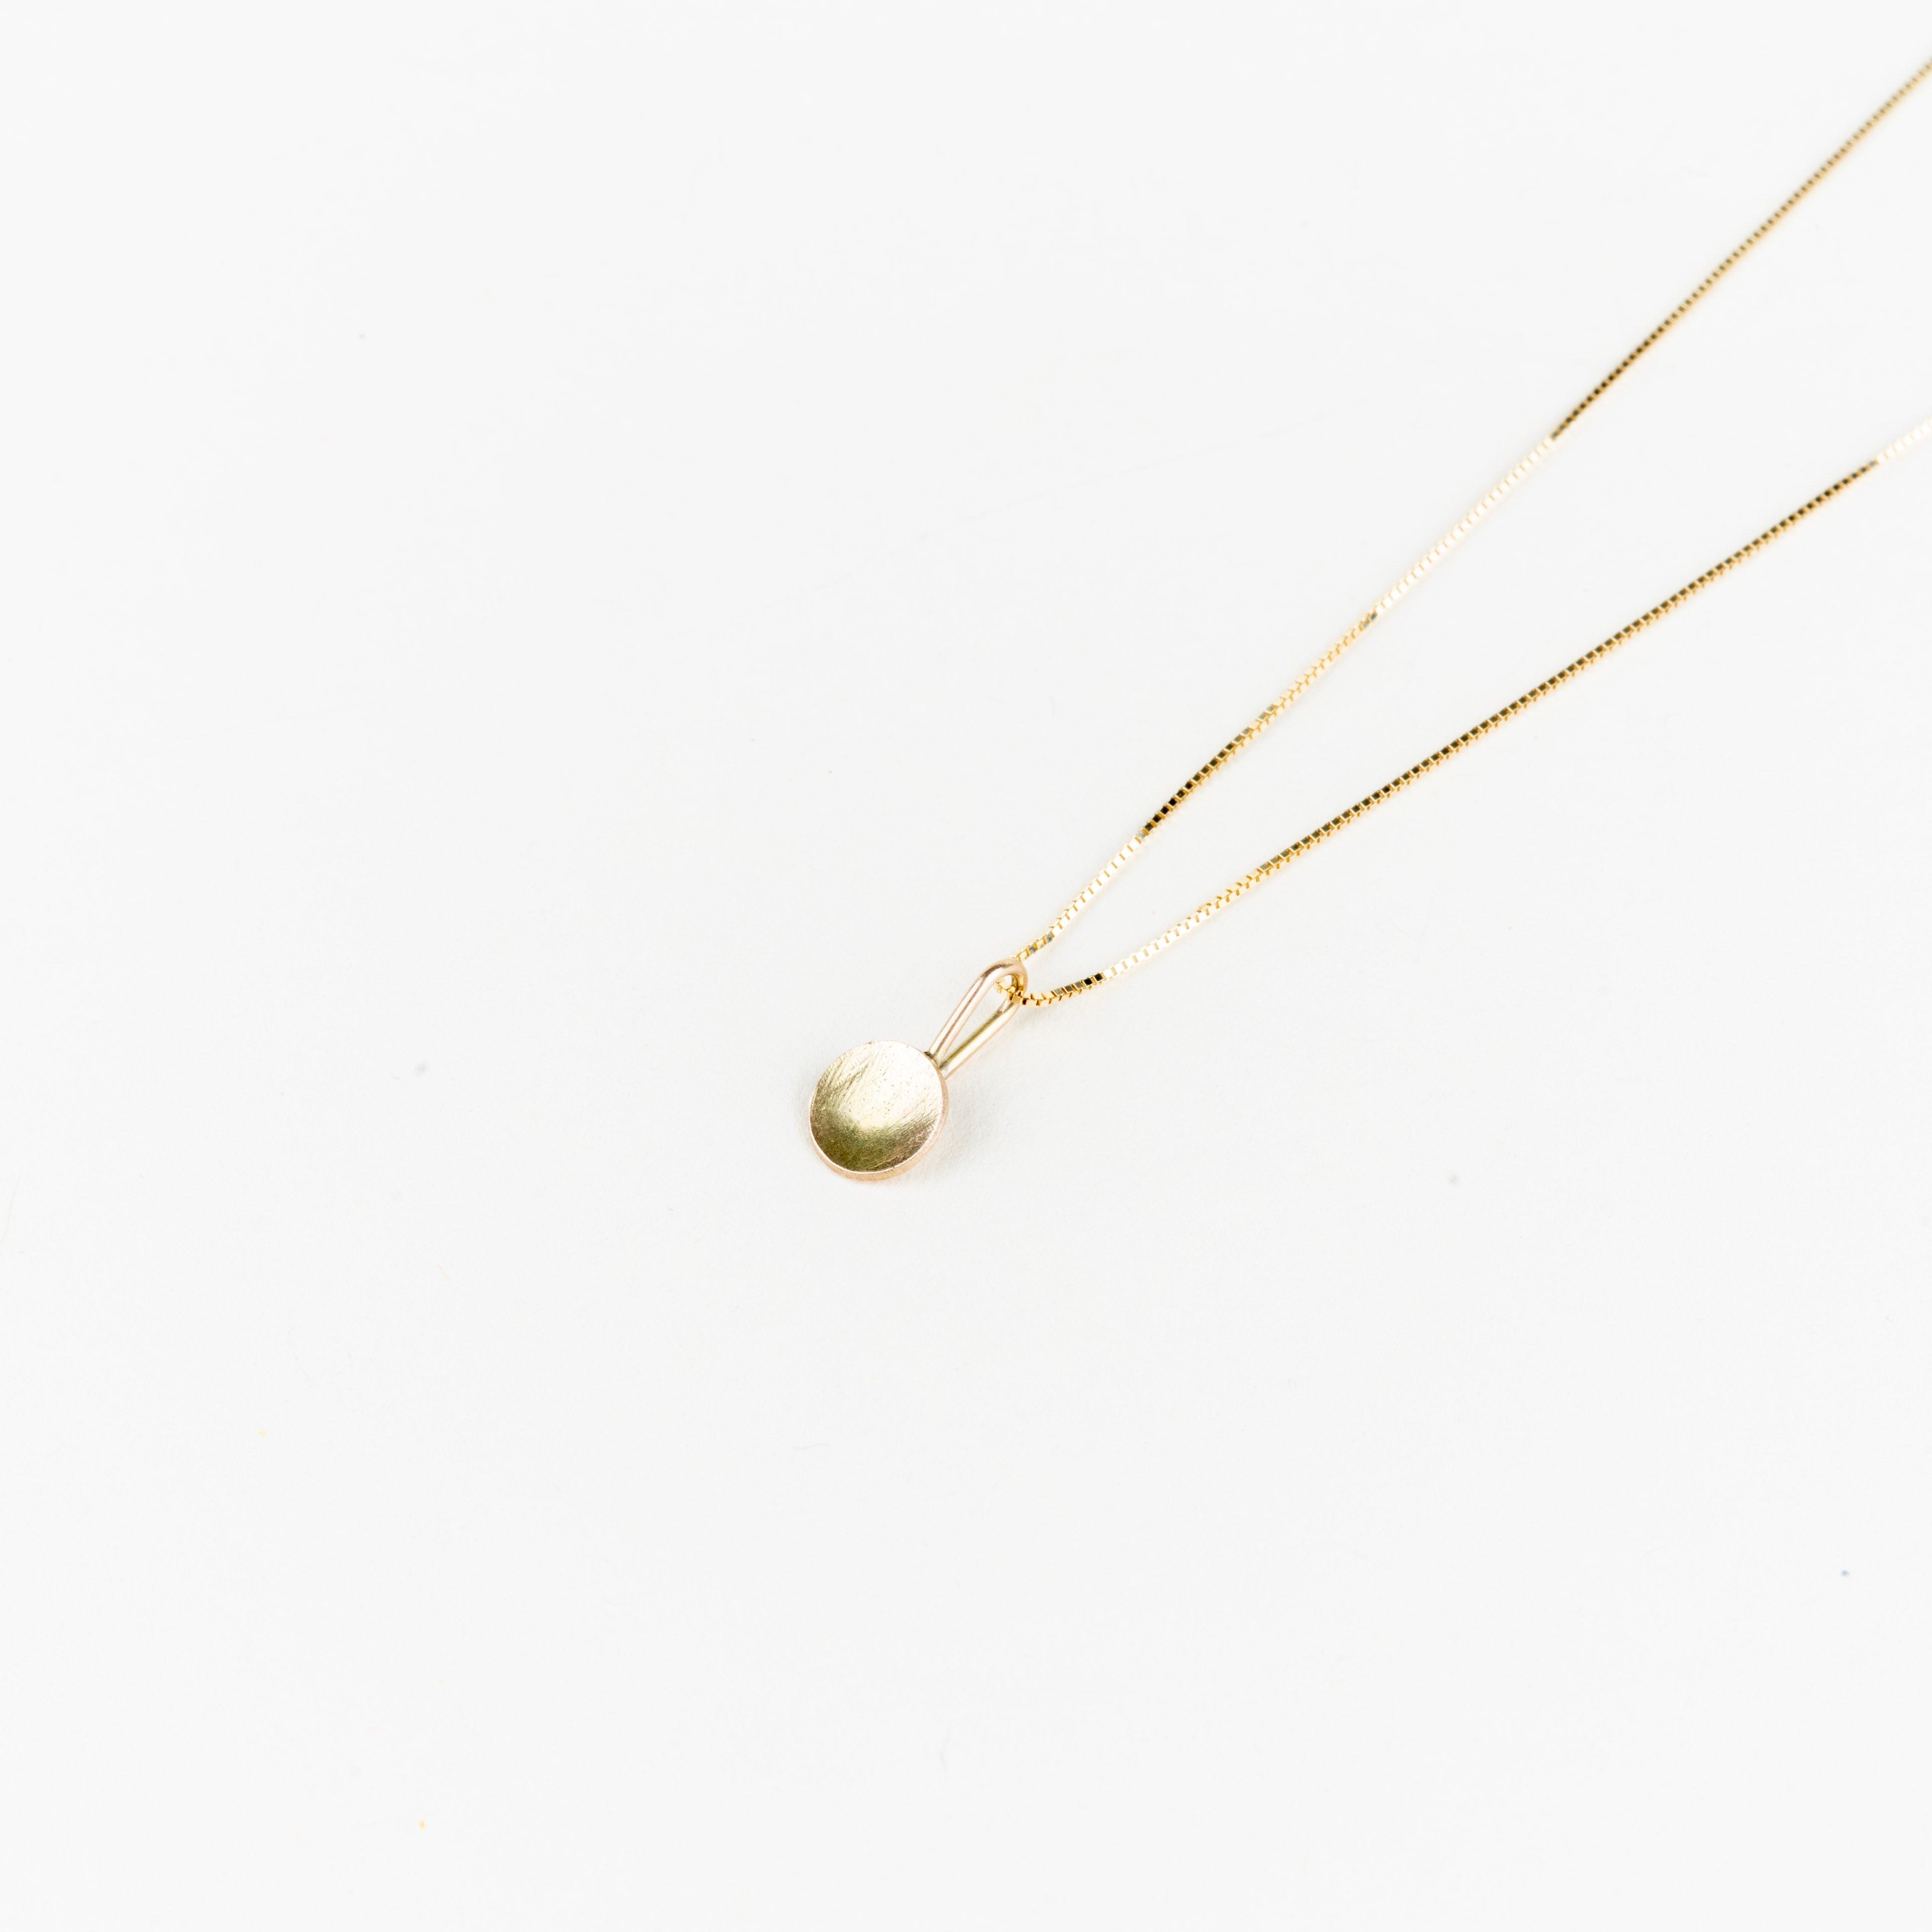 10k Gold Orbit Necklace